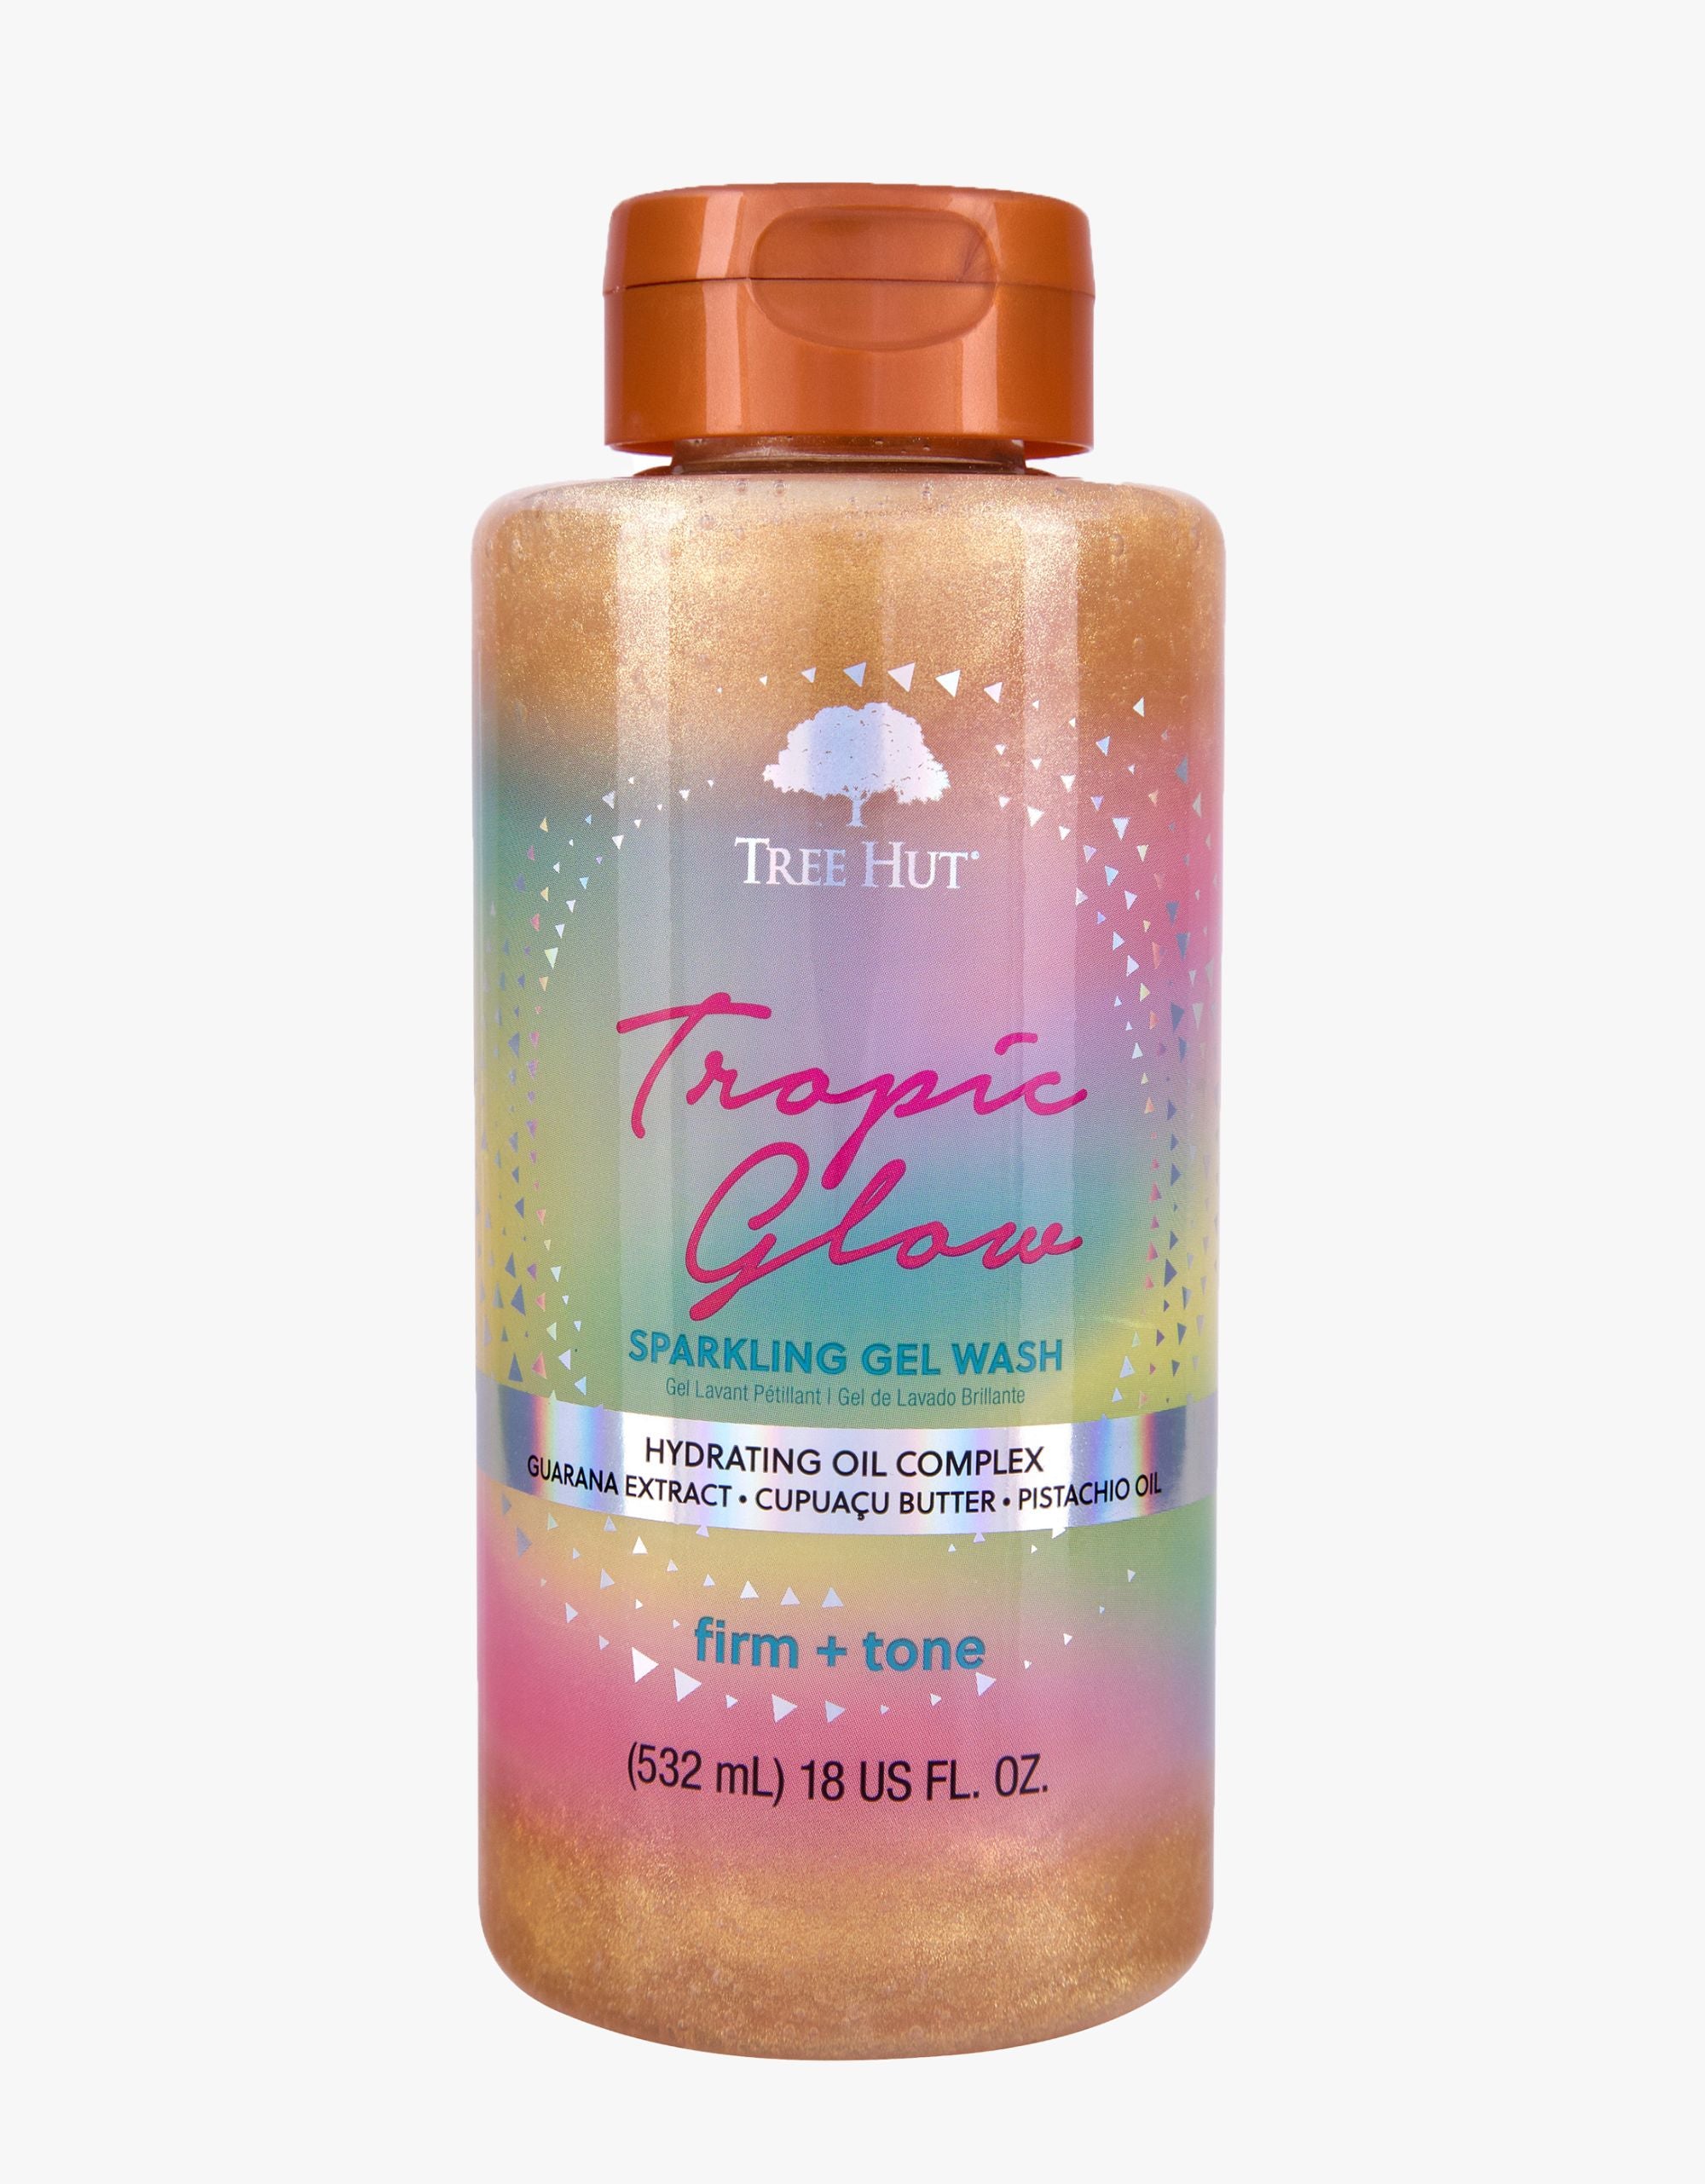 tropic glow sparkling gel wash – Tree Hut Shea®